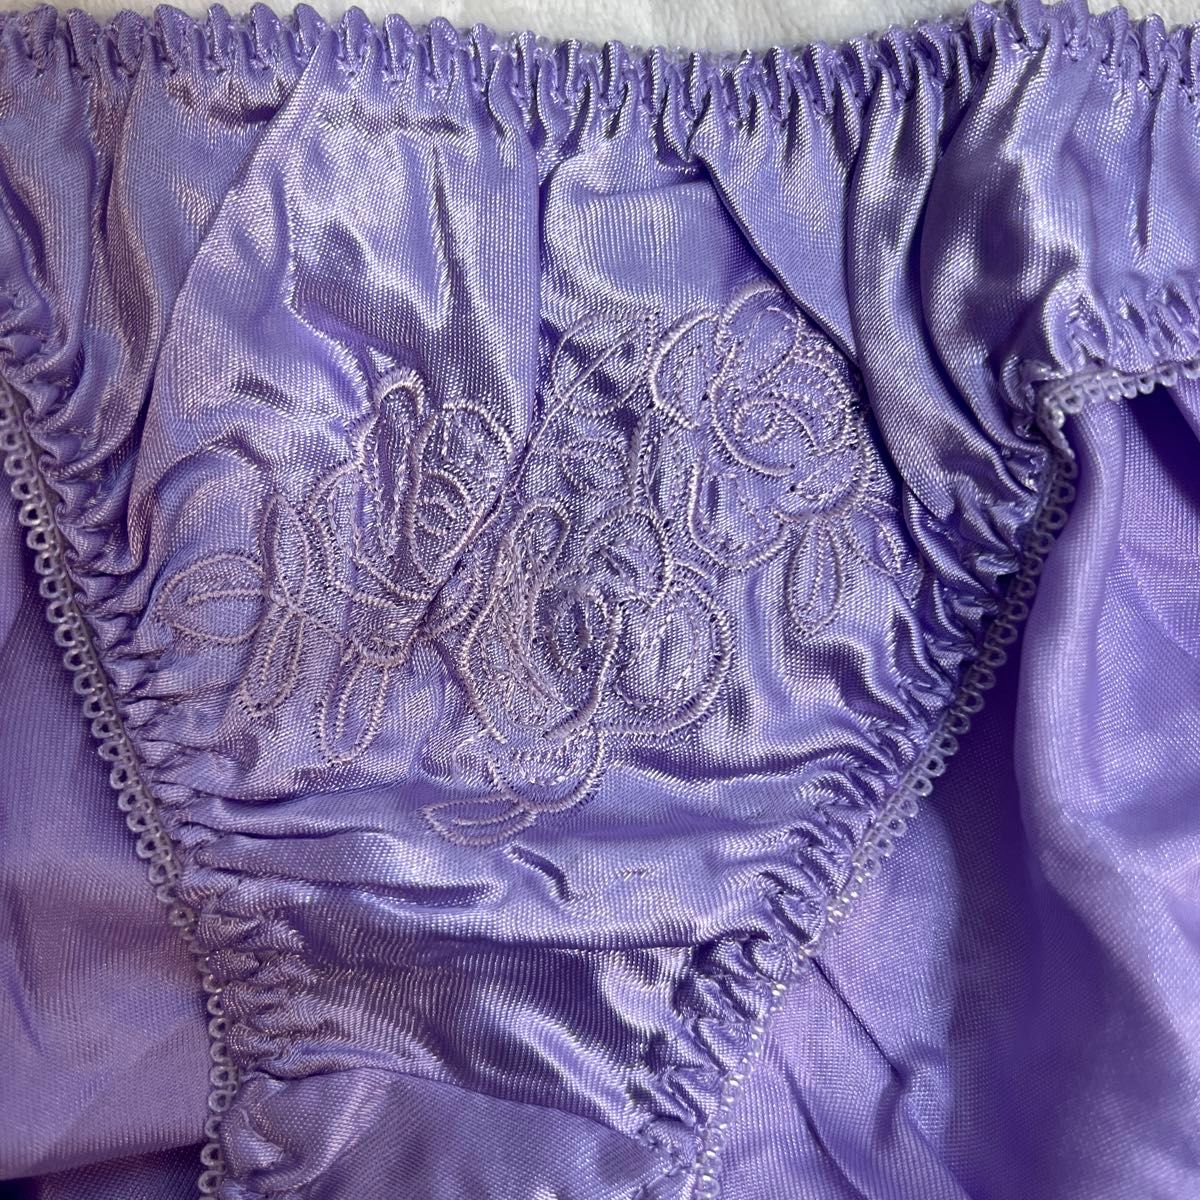 S002 未使用 バラの刺繍が大人っぽい パープルのトリコットサテン生地のパンティ レディースショーツ フリーサイズ